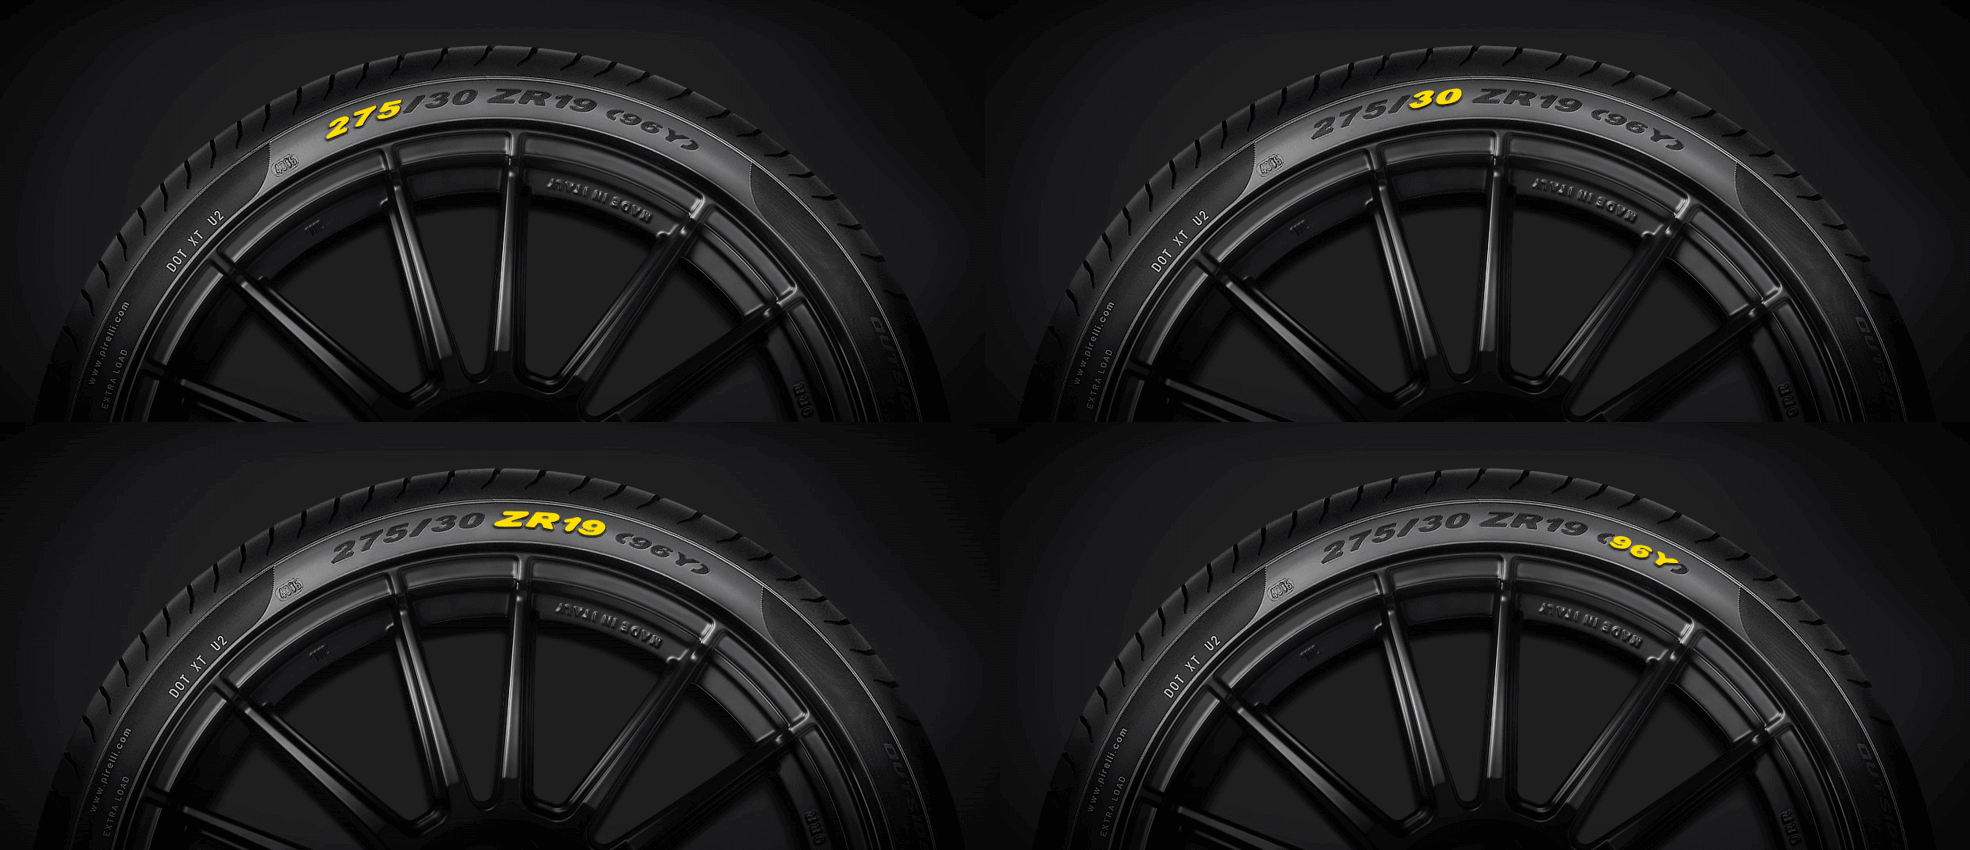 5 important tire basics from Pirelli